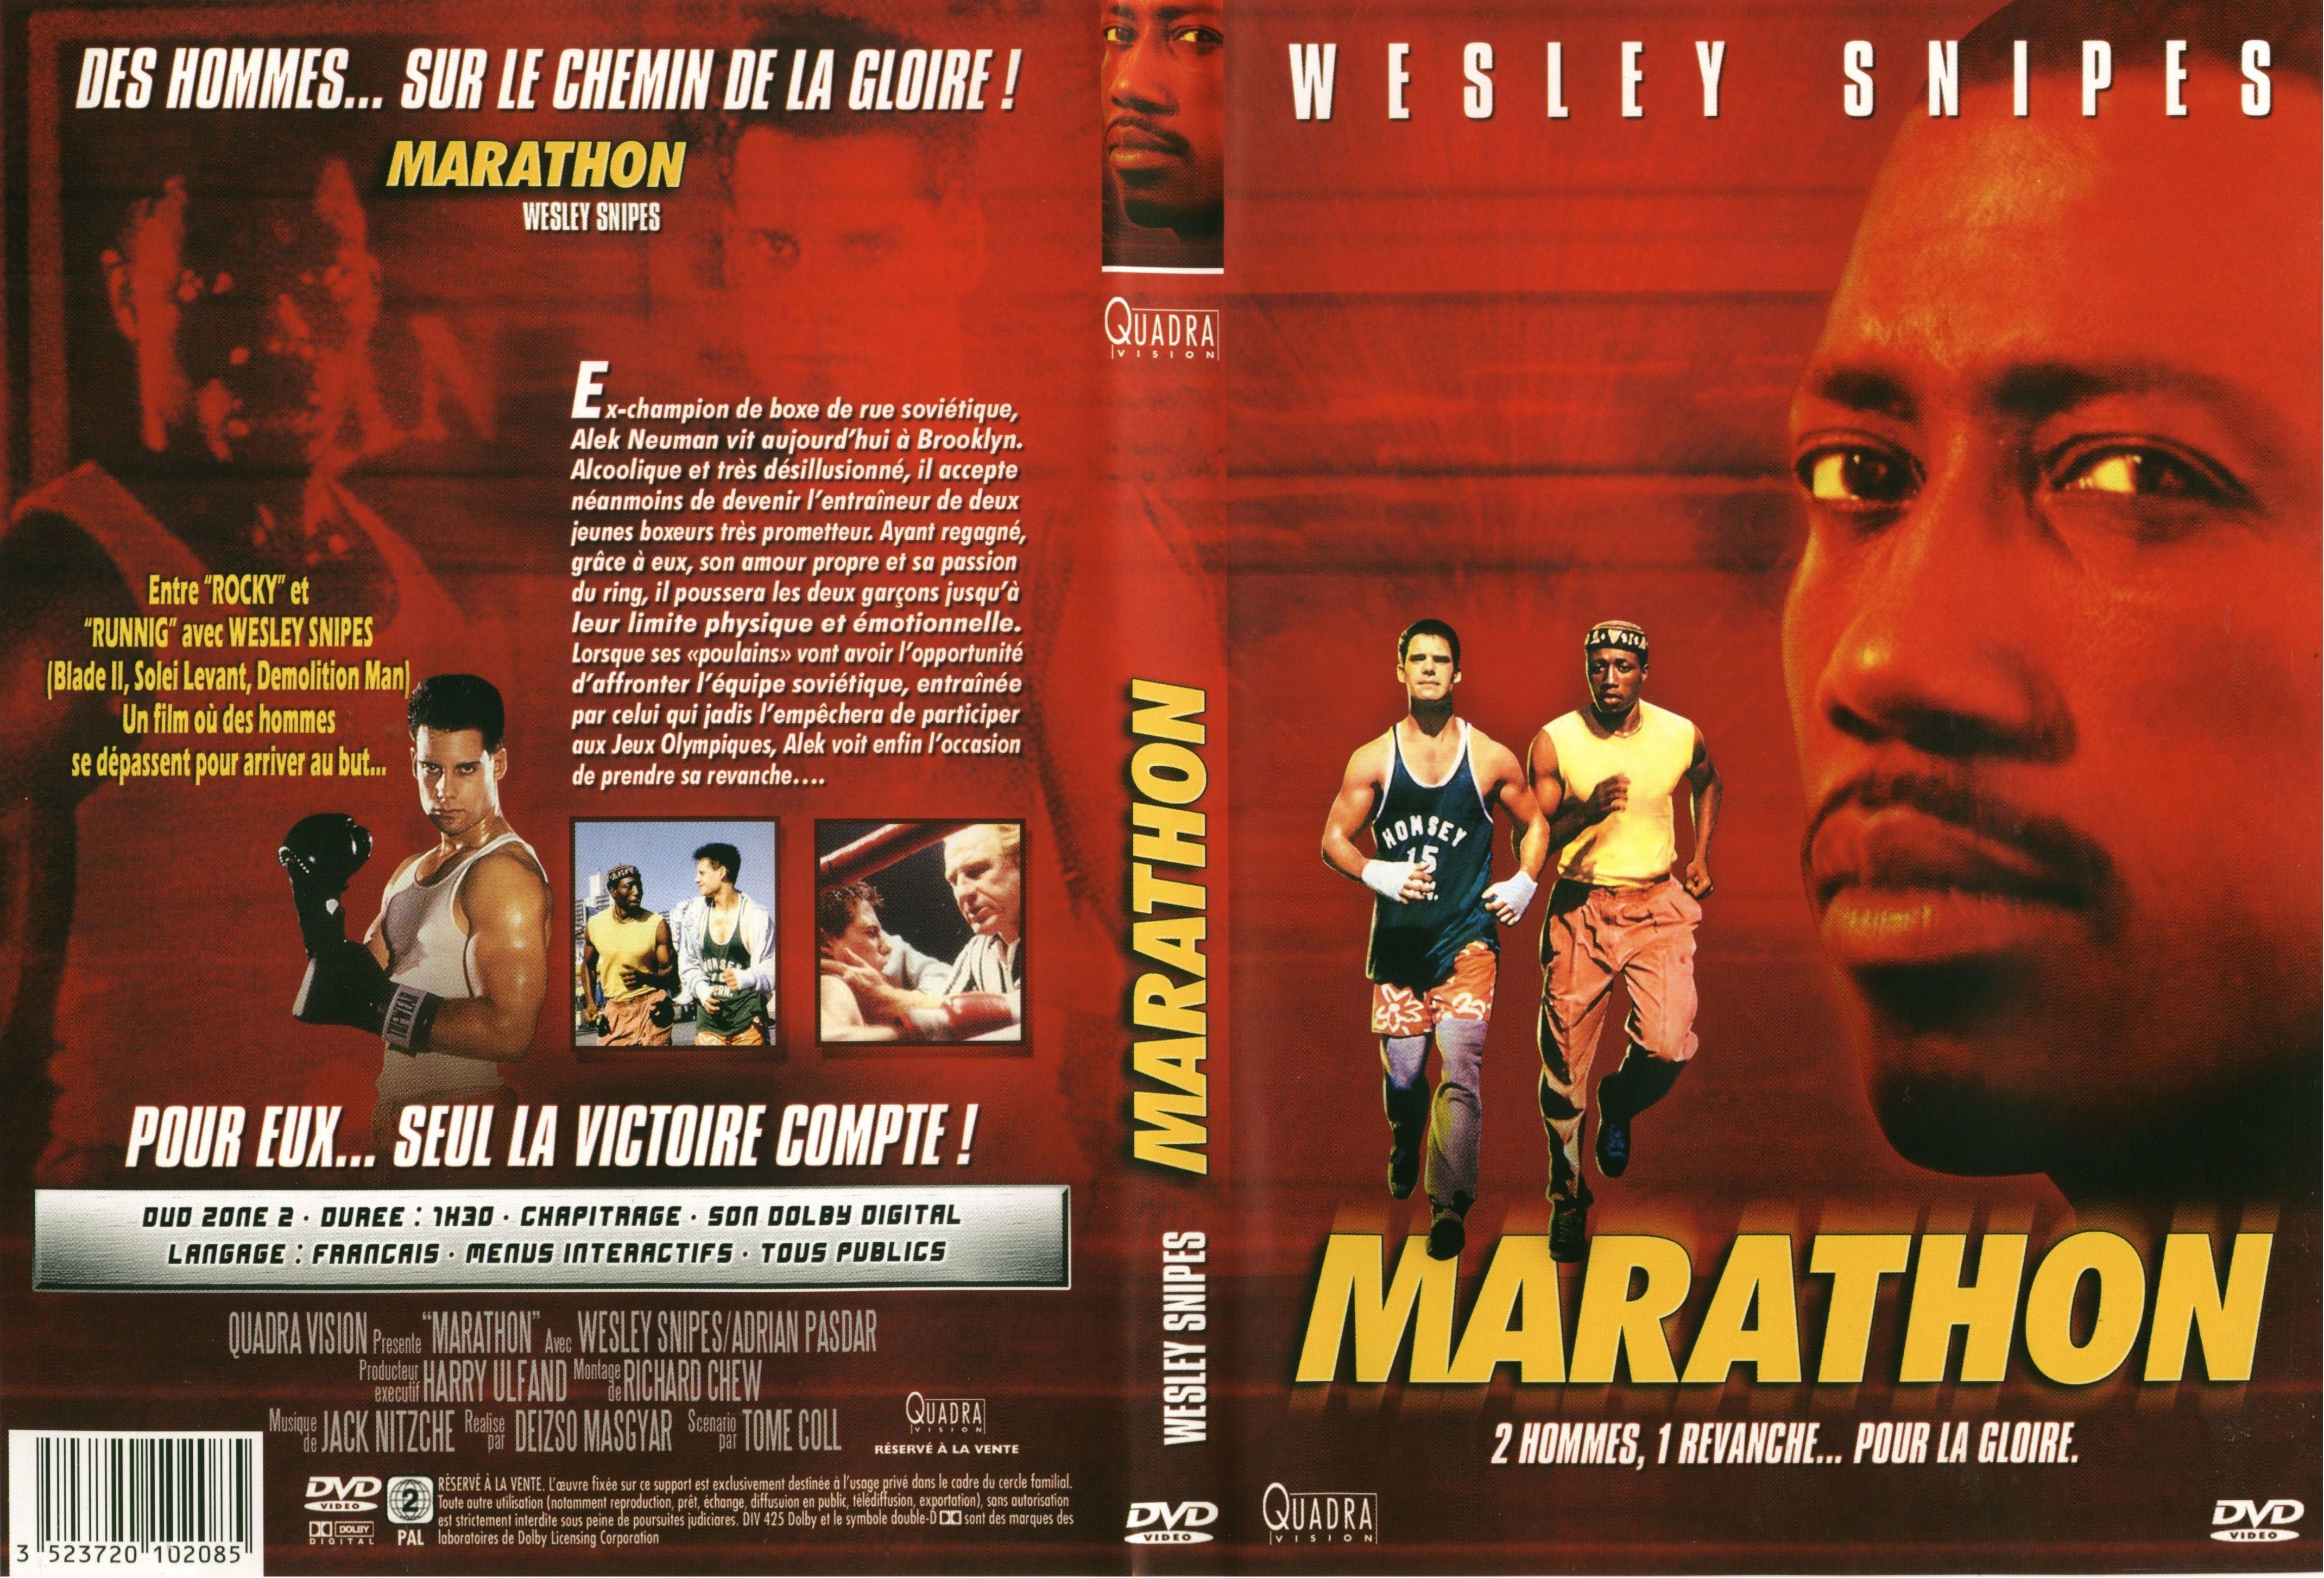 Jaquette DVD Marathon